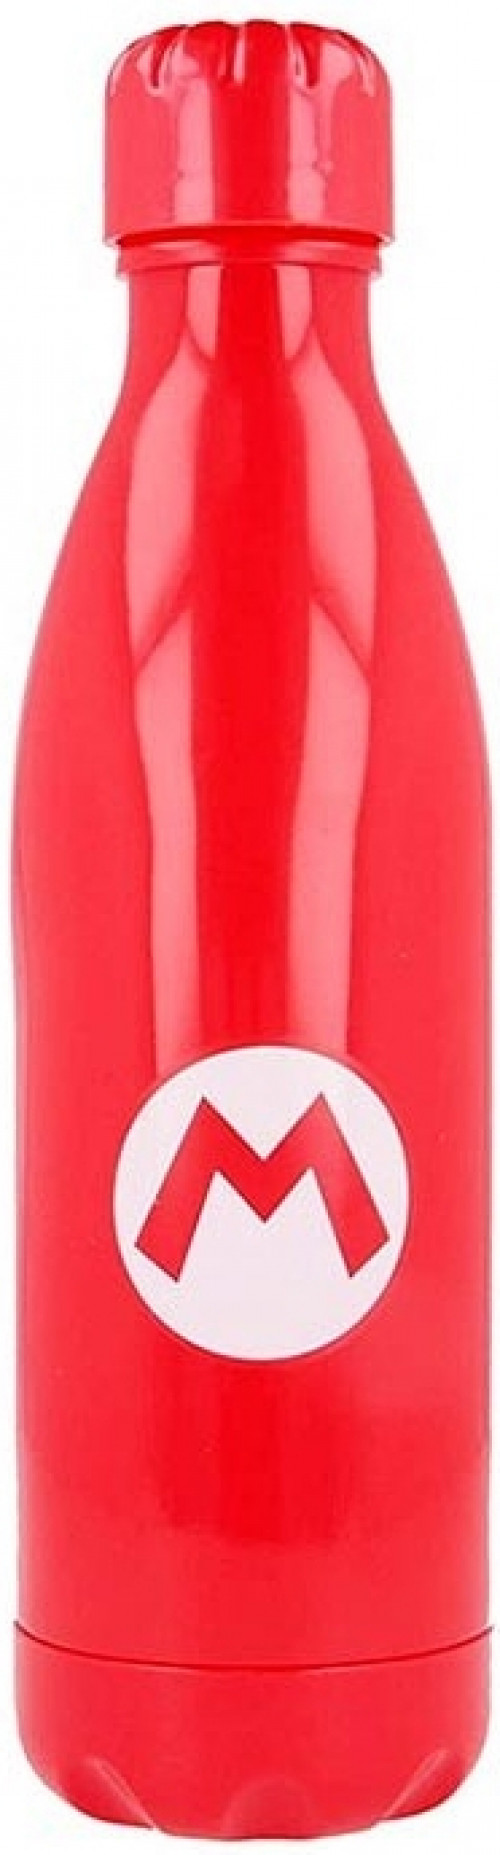 Stor Super Mario - Plastic Large Drinking Bottle